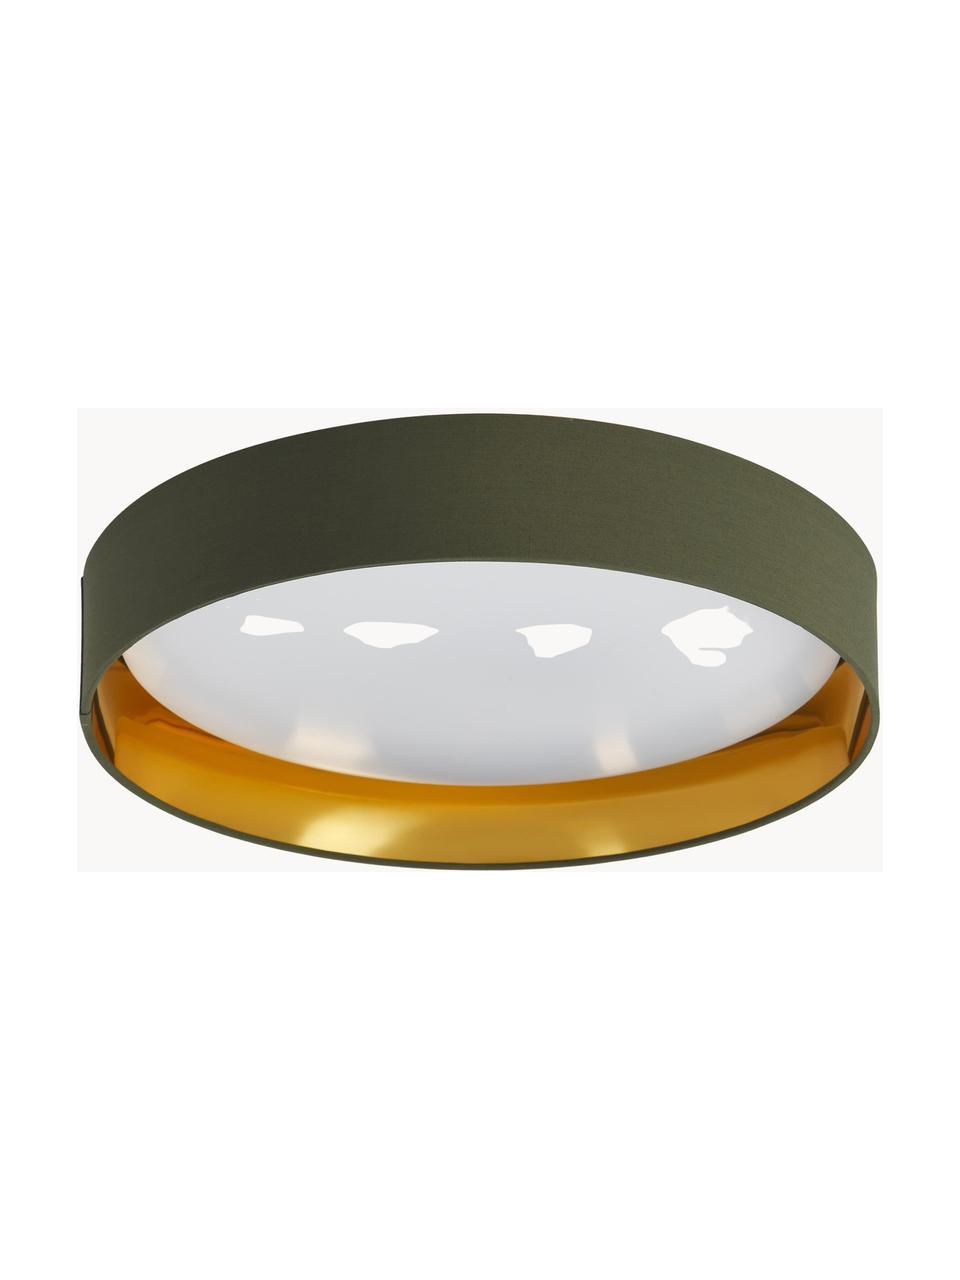 LED-Deckenleuchte Mallory, Diffusorscheibe: Kunststoff, Dunkelgrün, Goldfarben, Ø 41 x H 10 cm